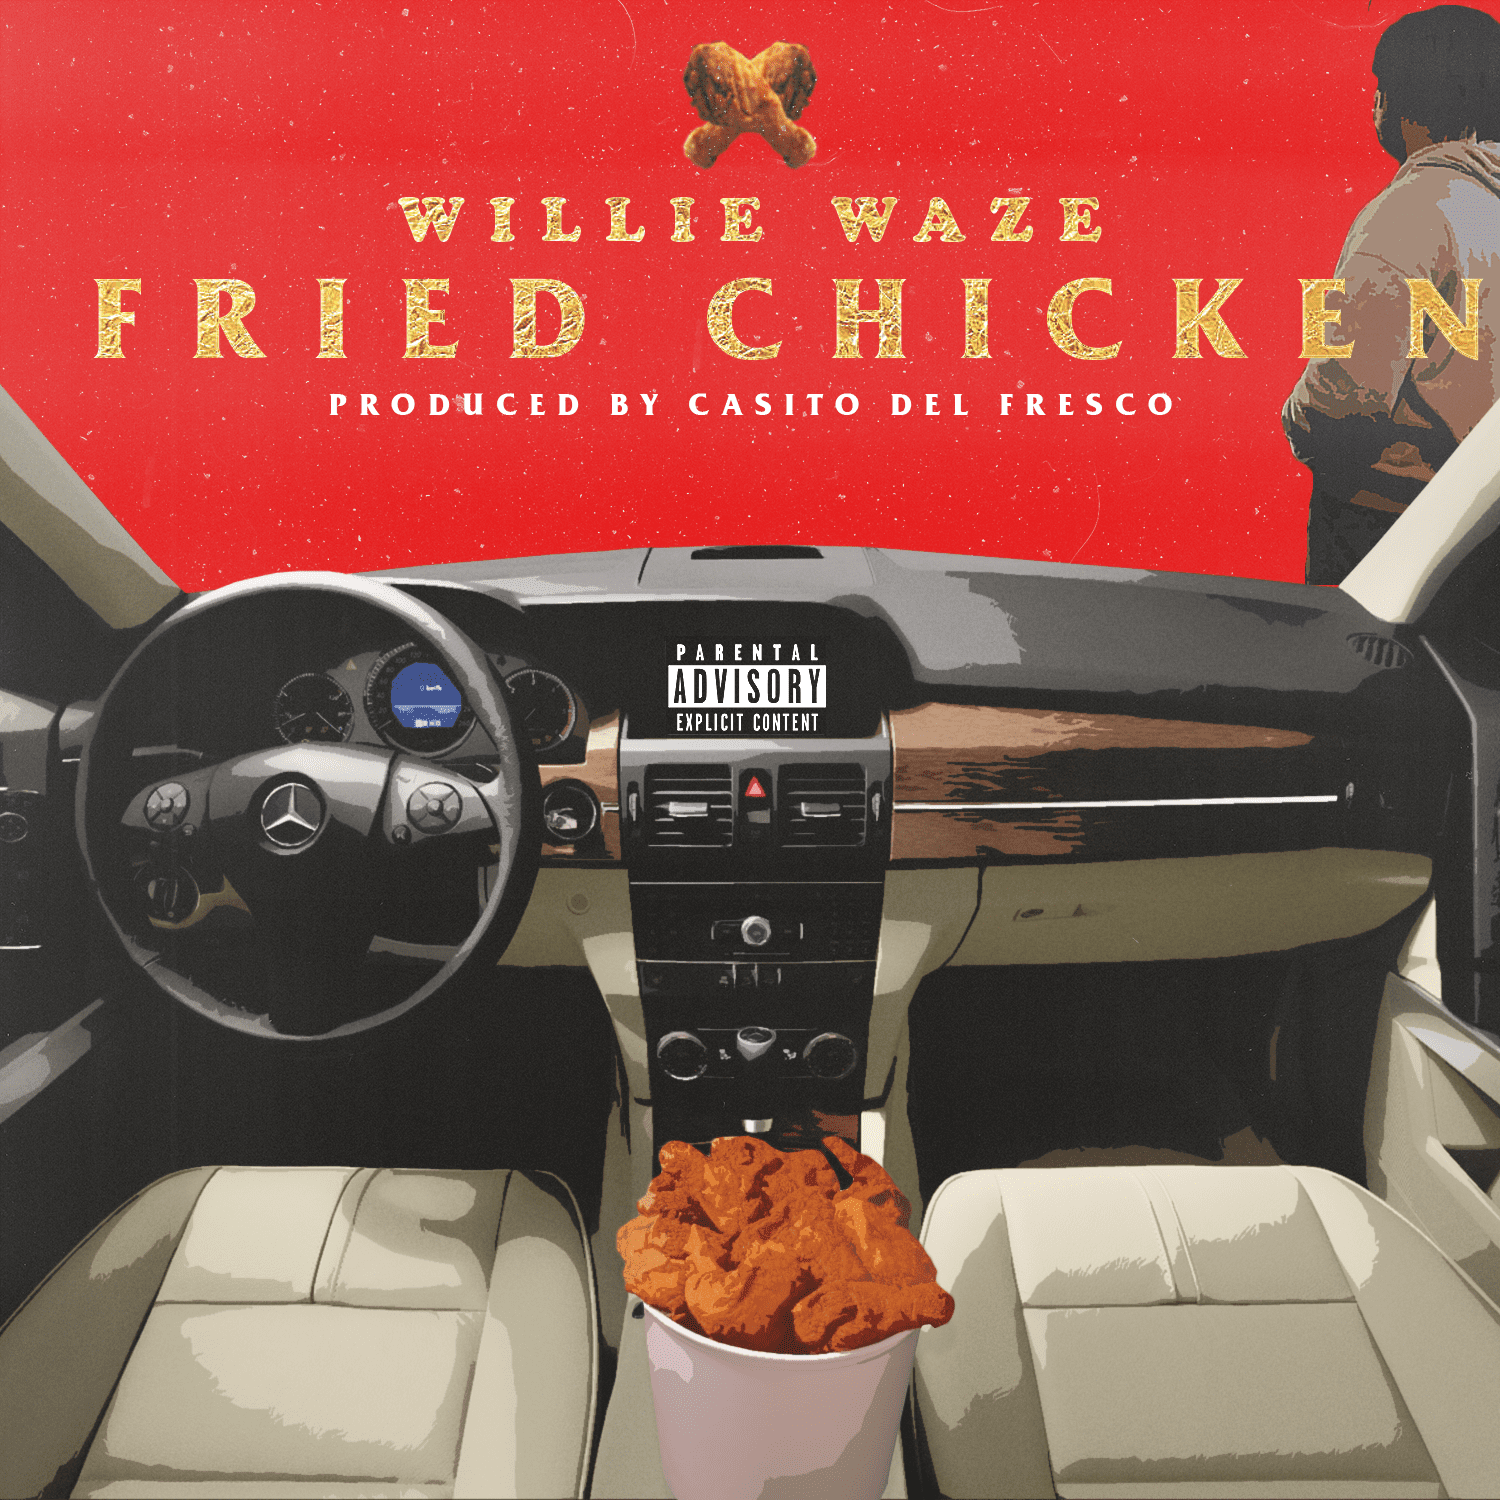 Willie Waze Drops New Video - "Fried Chicken"